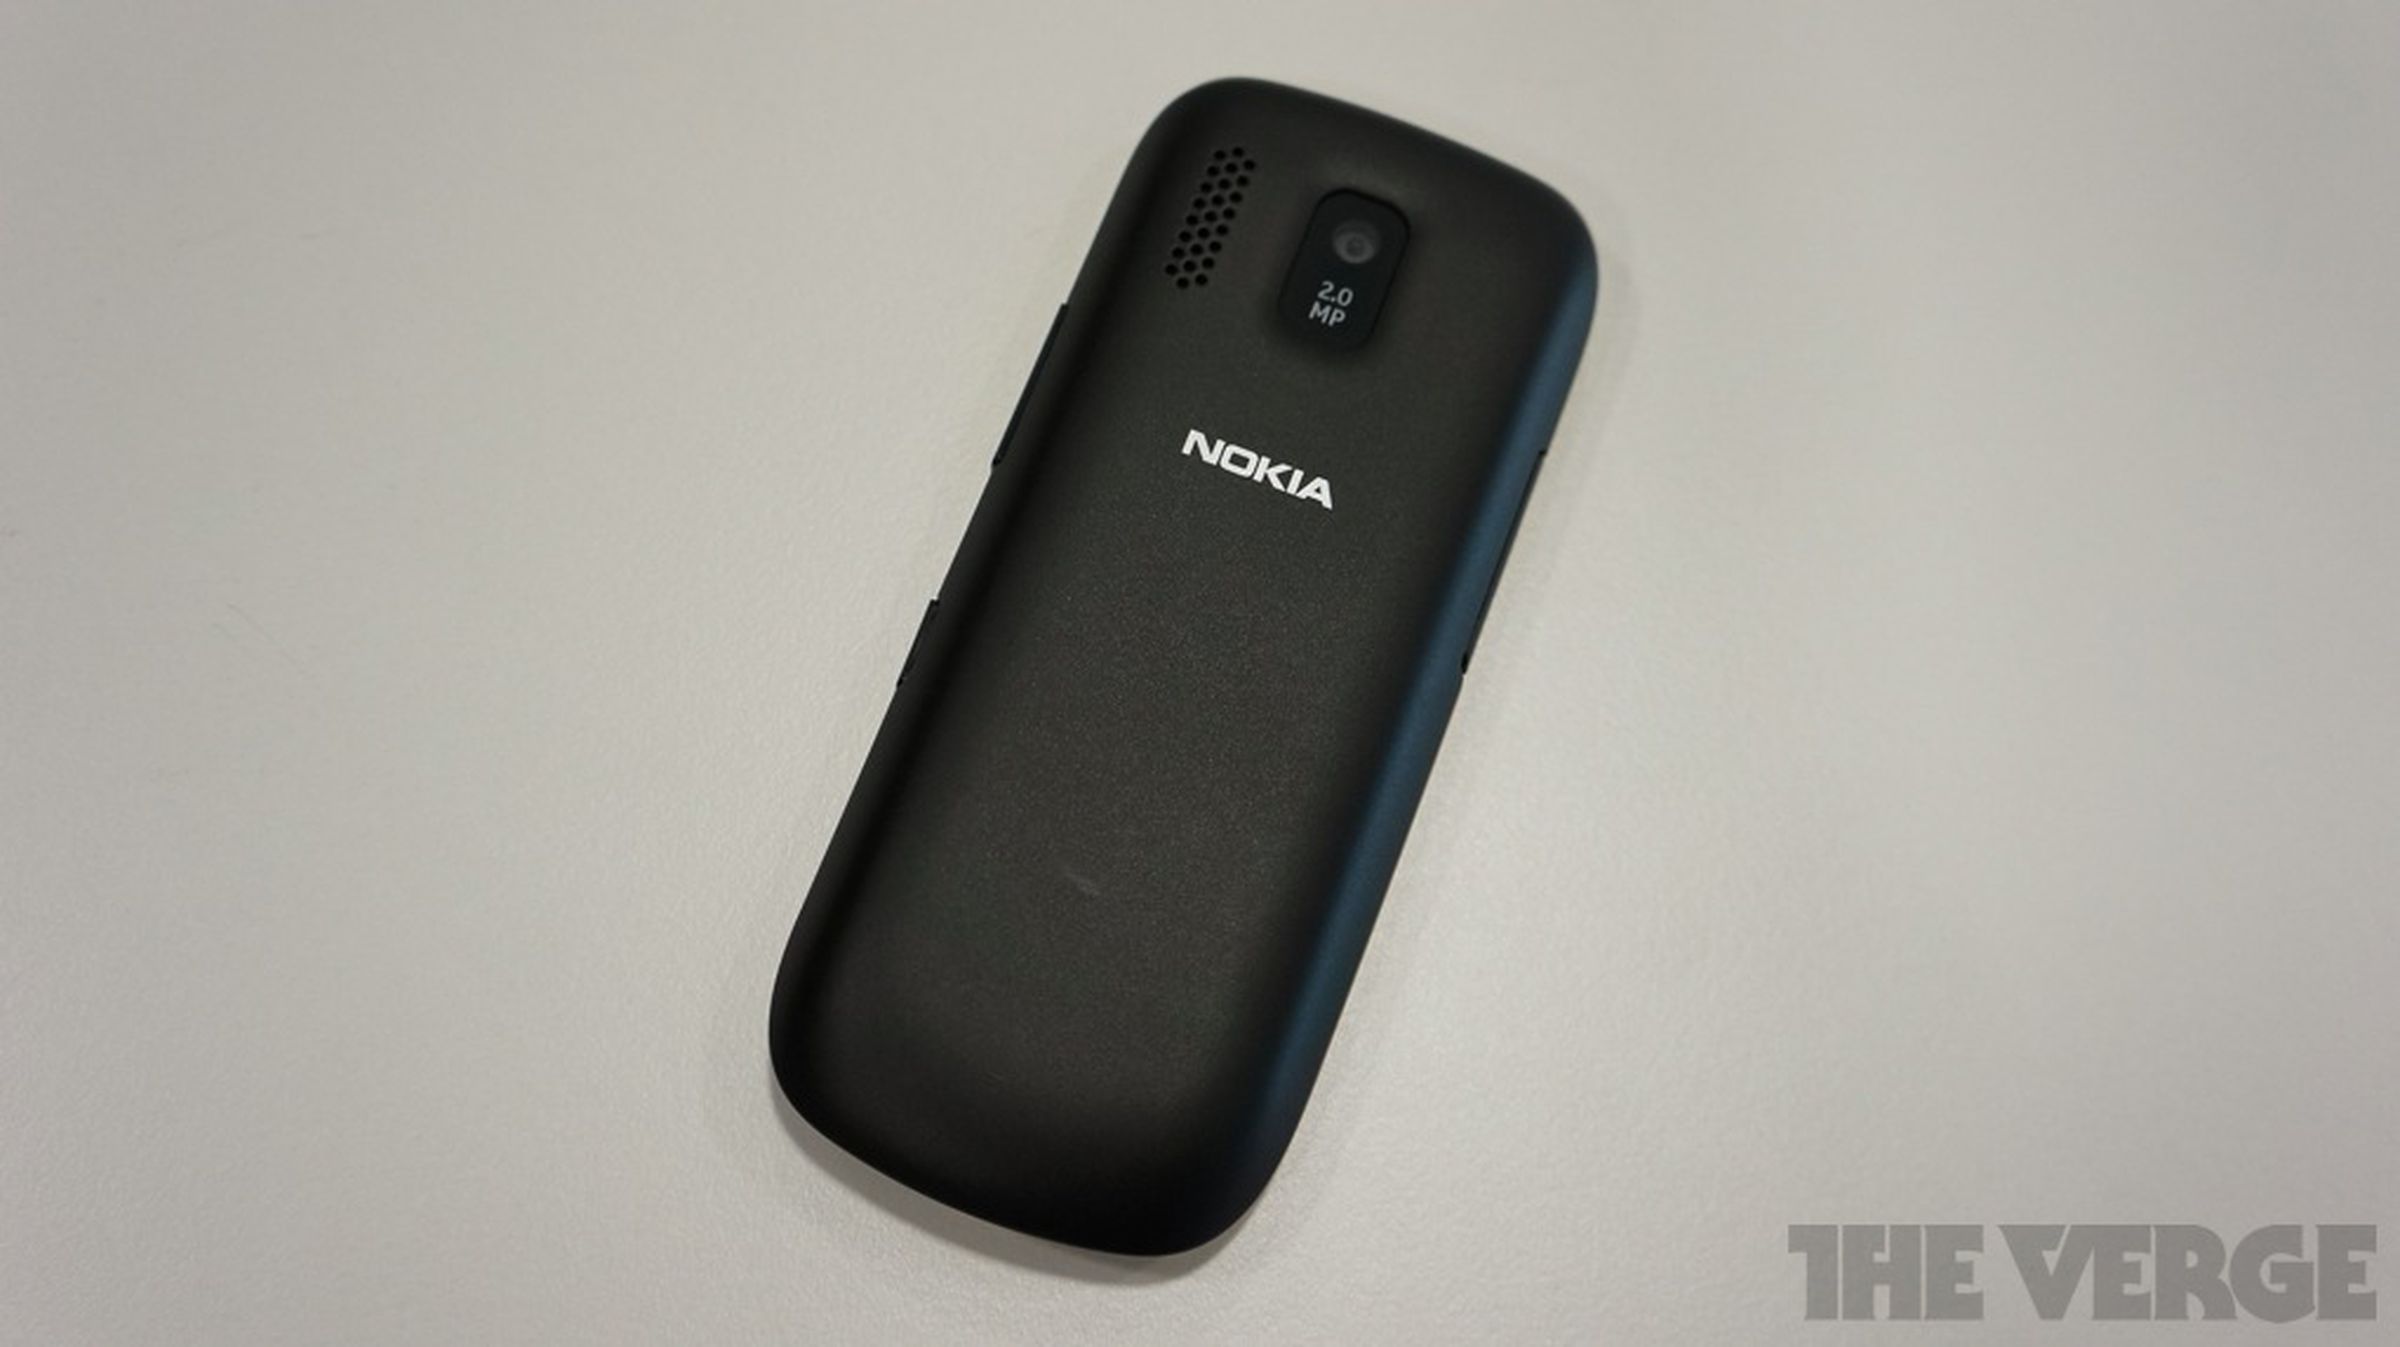 Nokia Asha 302 and 202/203 hands-on photos